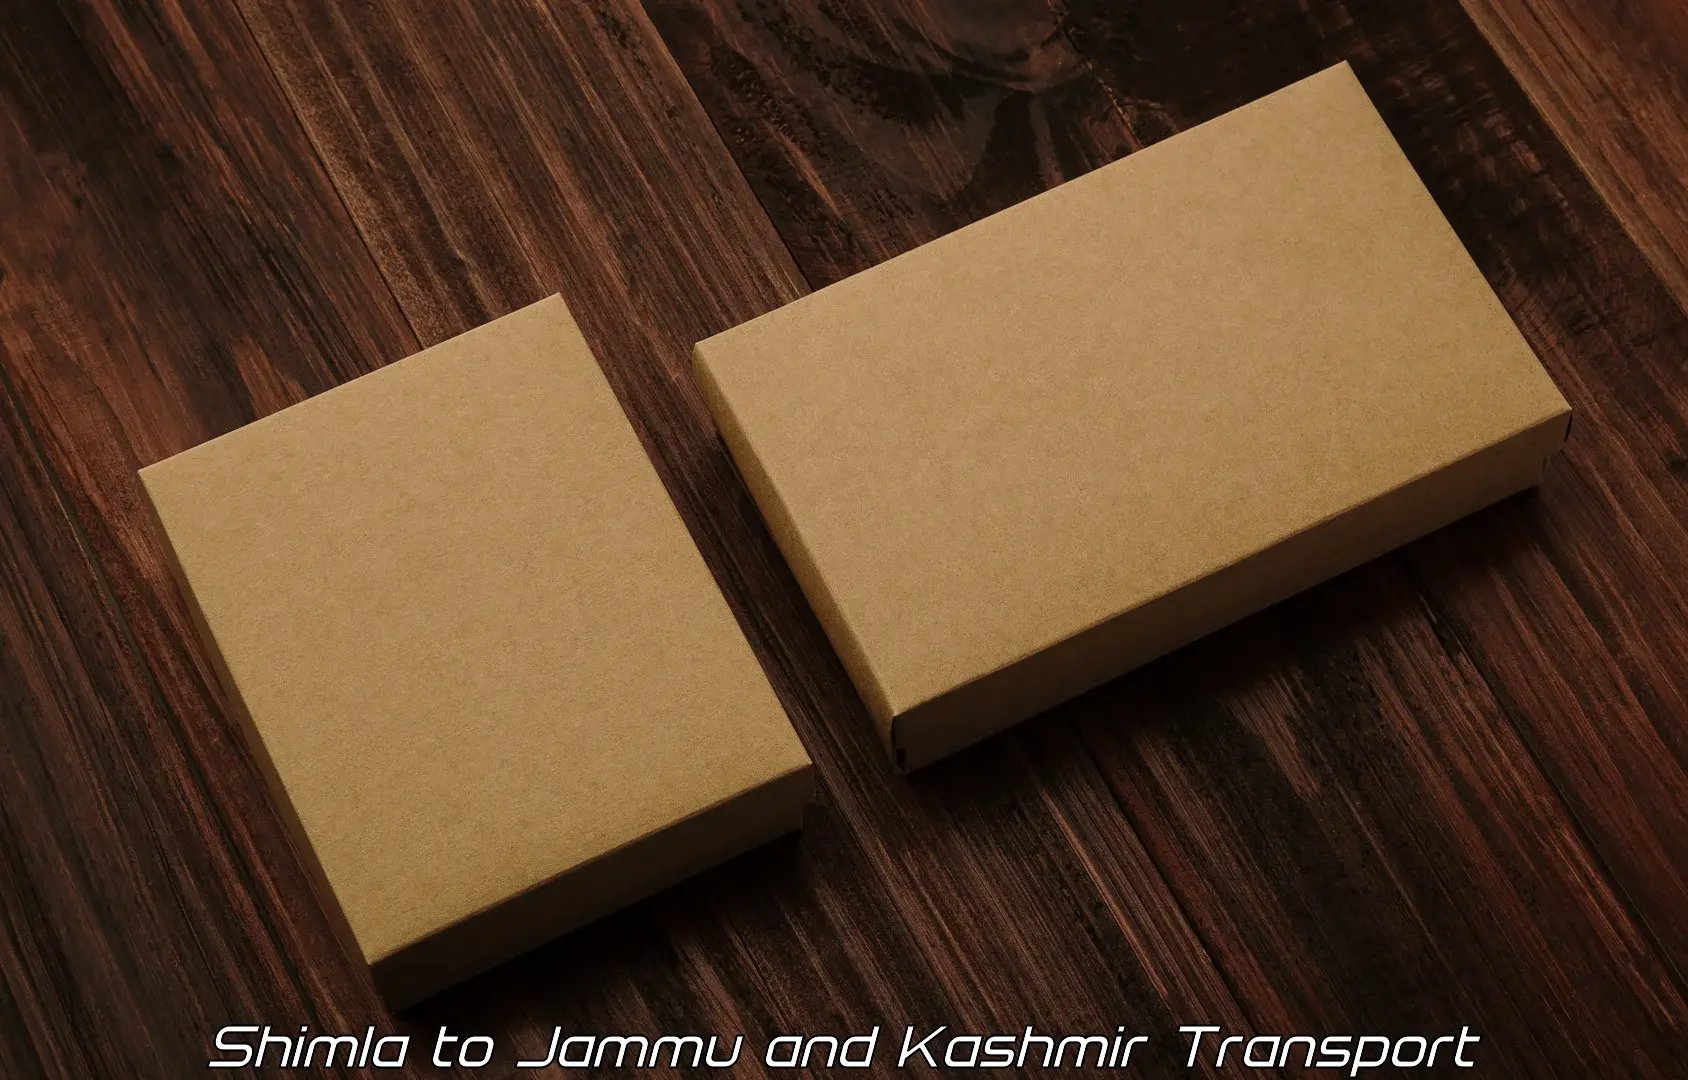 Transport in sharing Shimla to Srinagar Kashmir